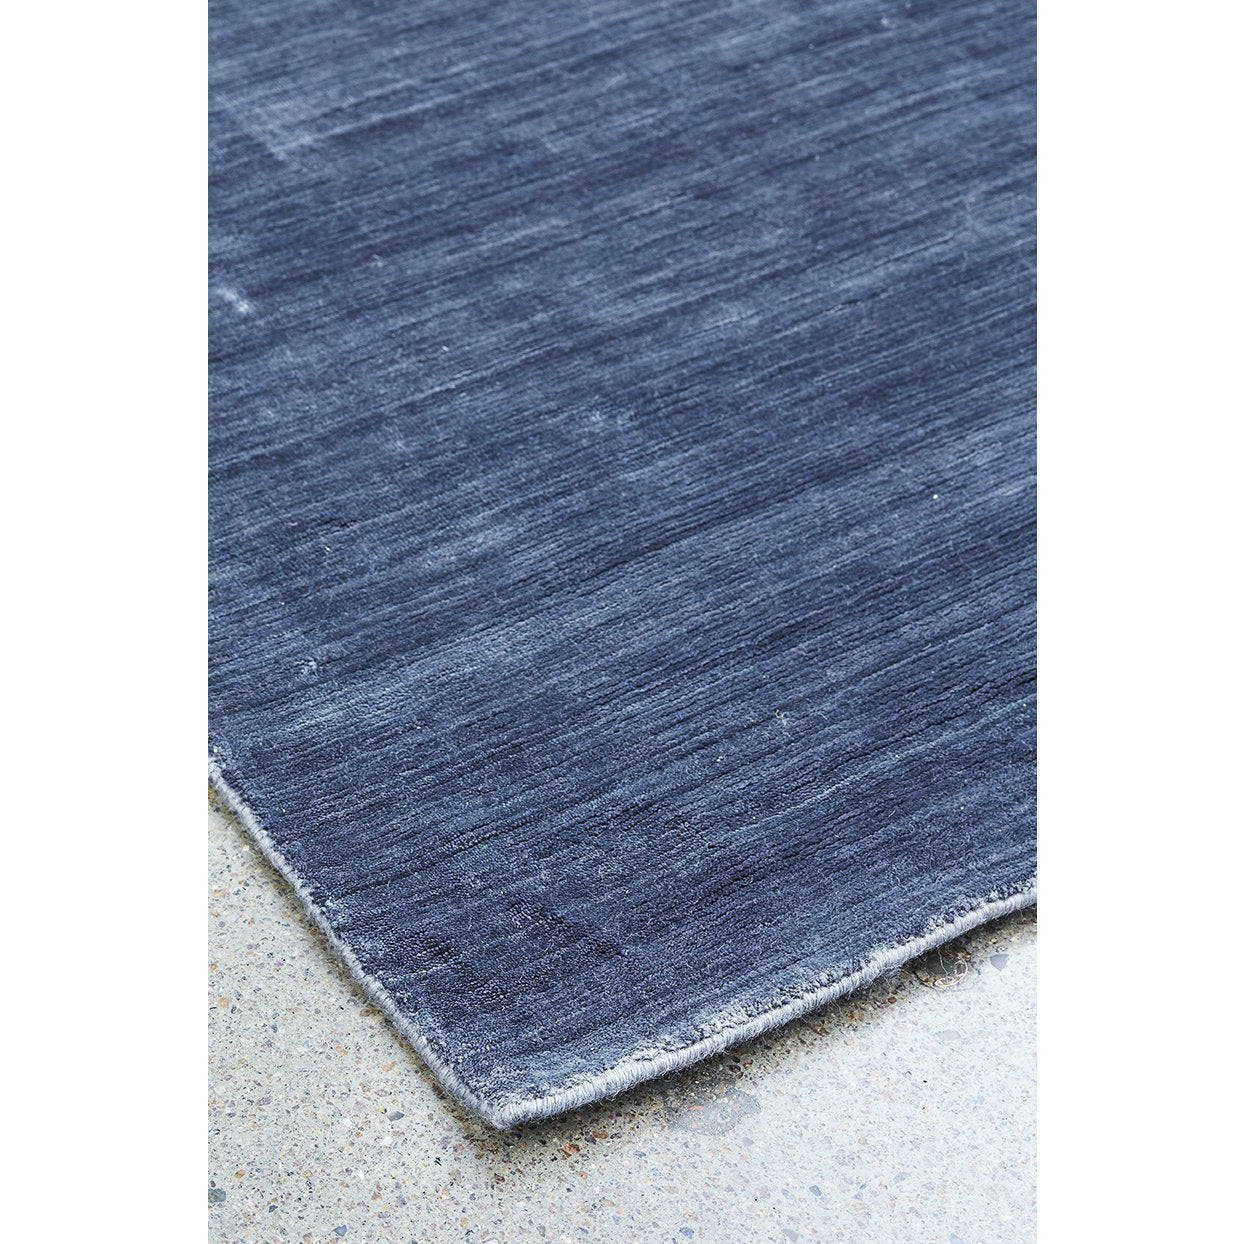 Massimo Bambus Teppich Stahl schwarz, 250x300 cm